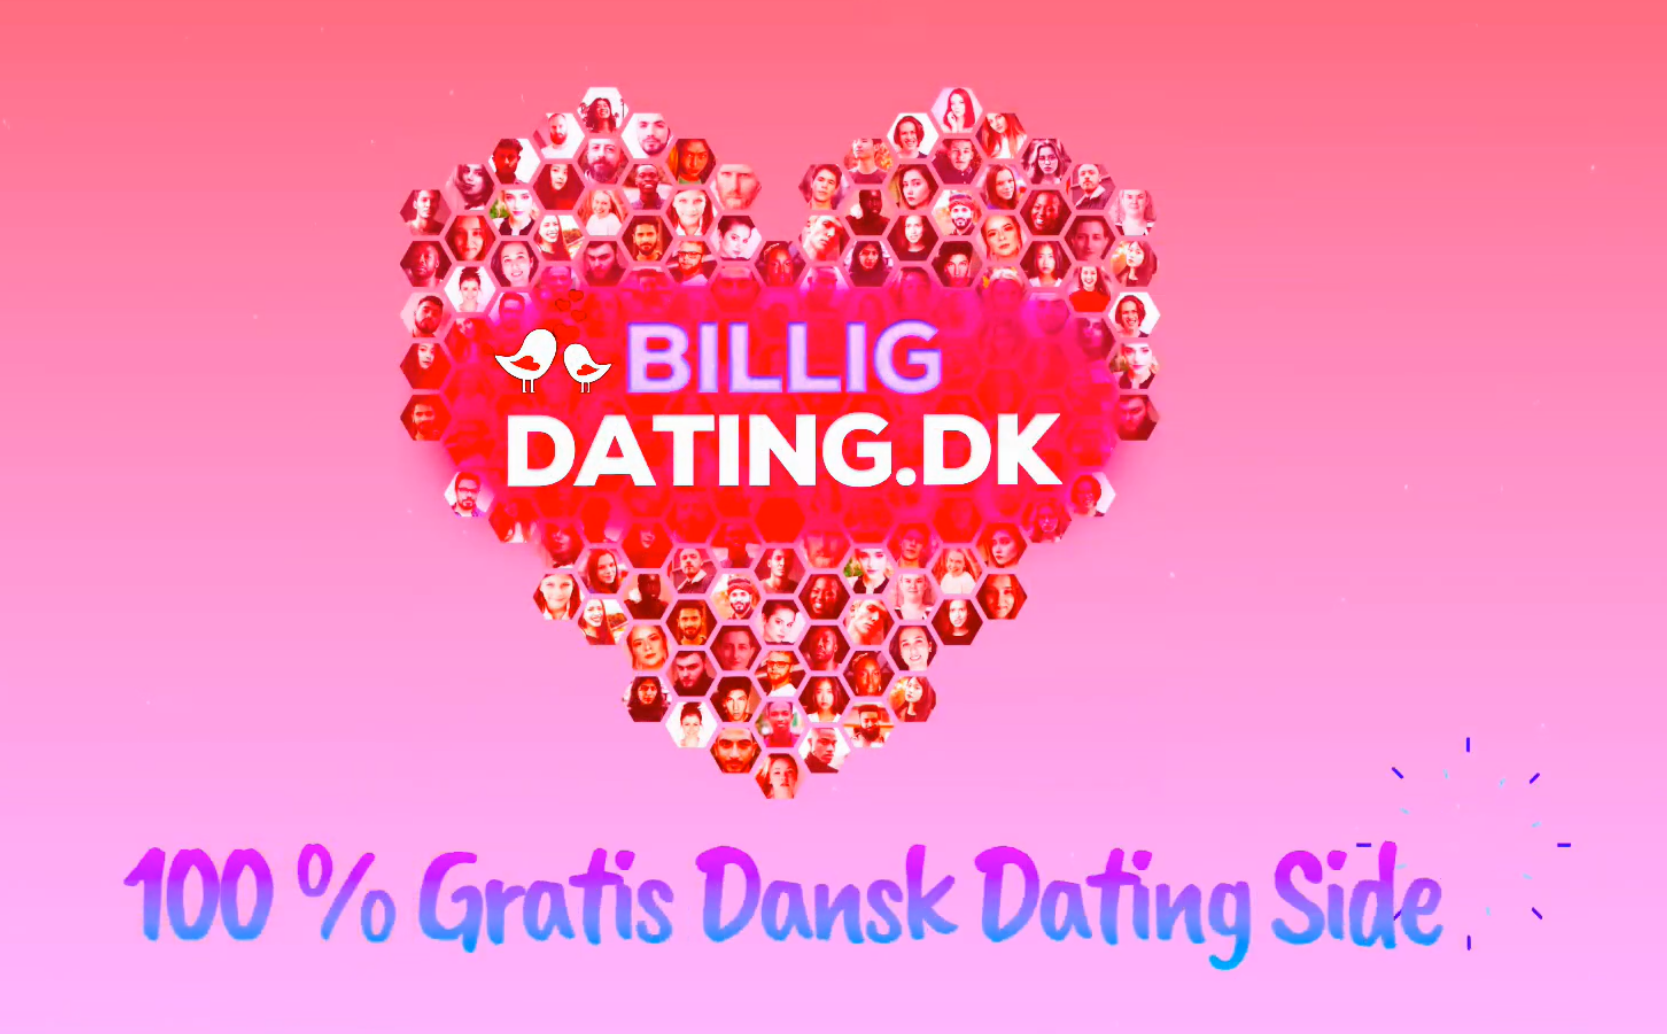 Gratis Dansk Dating side